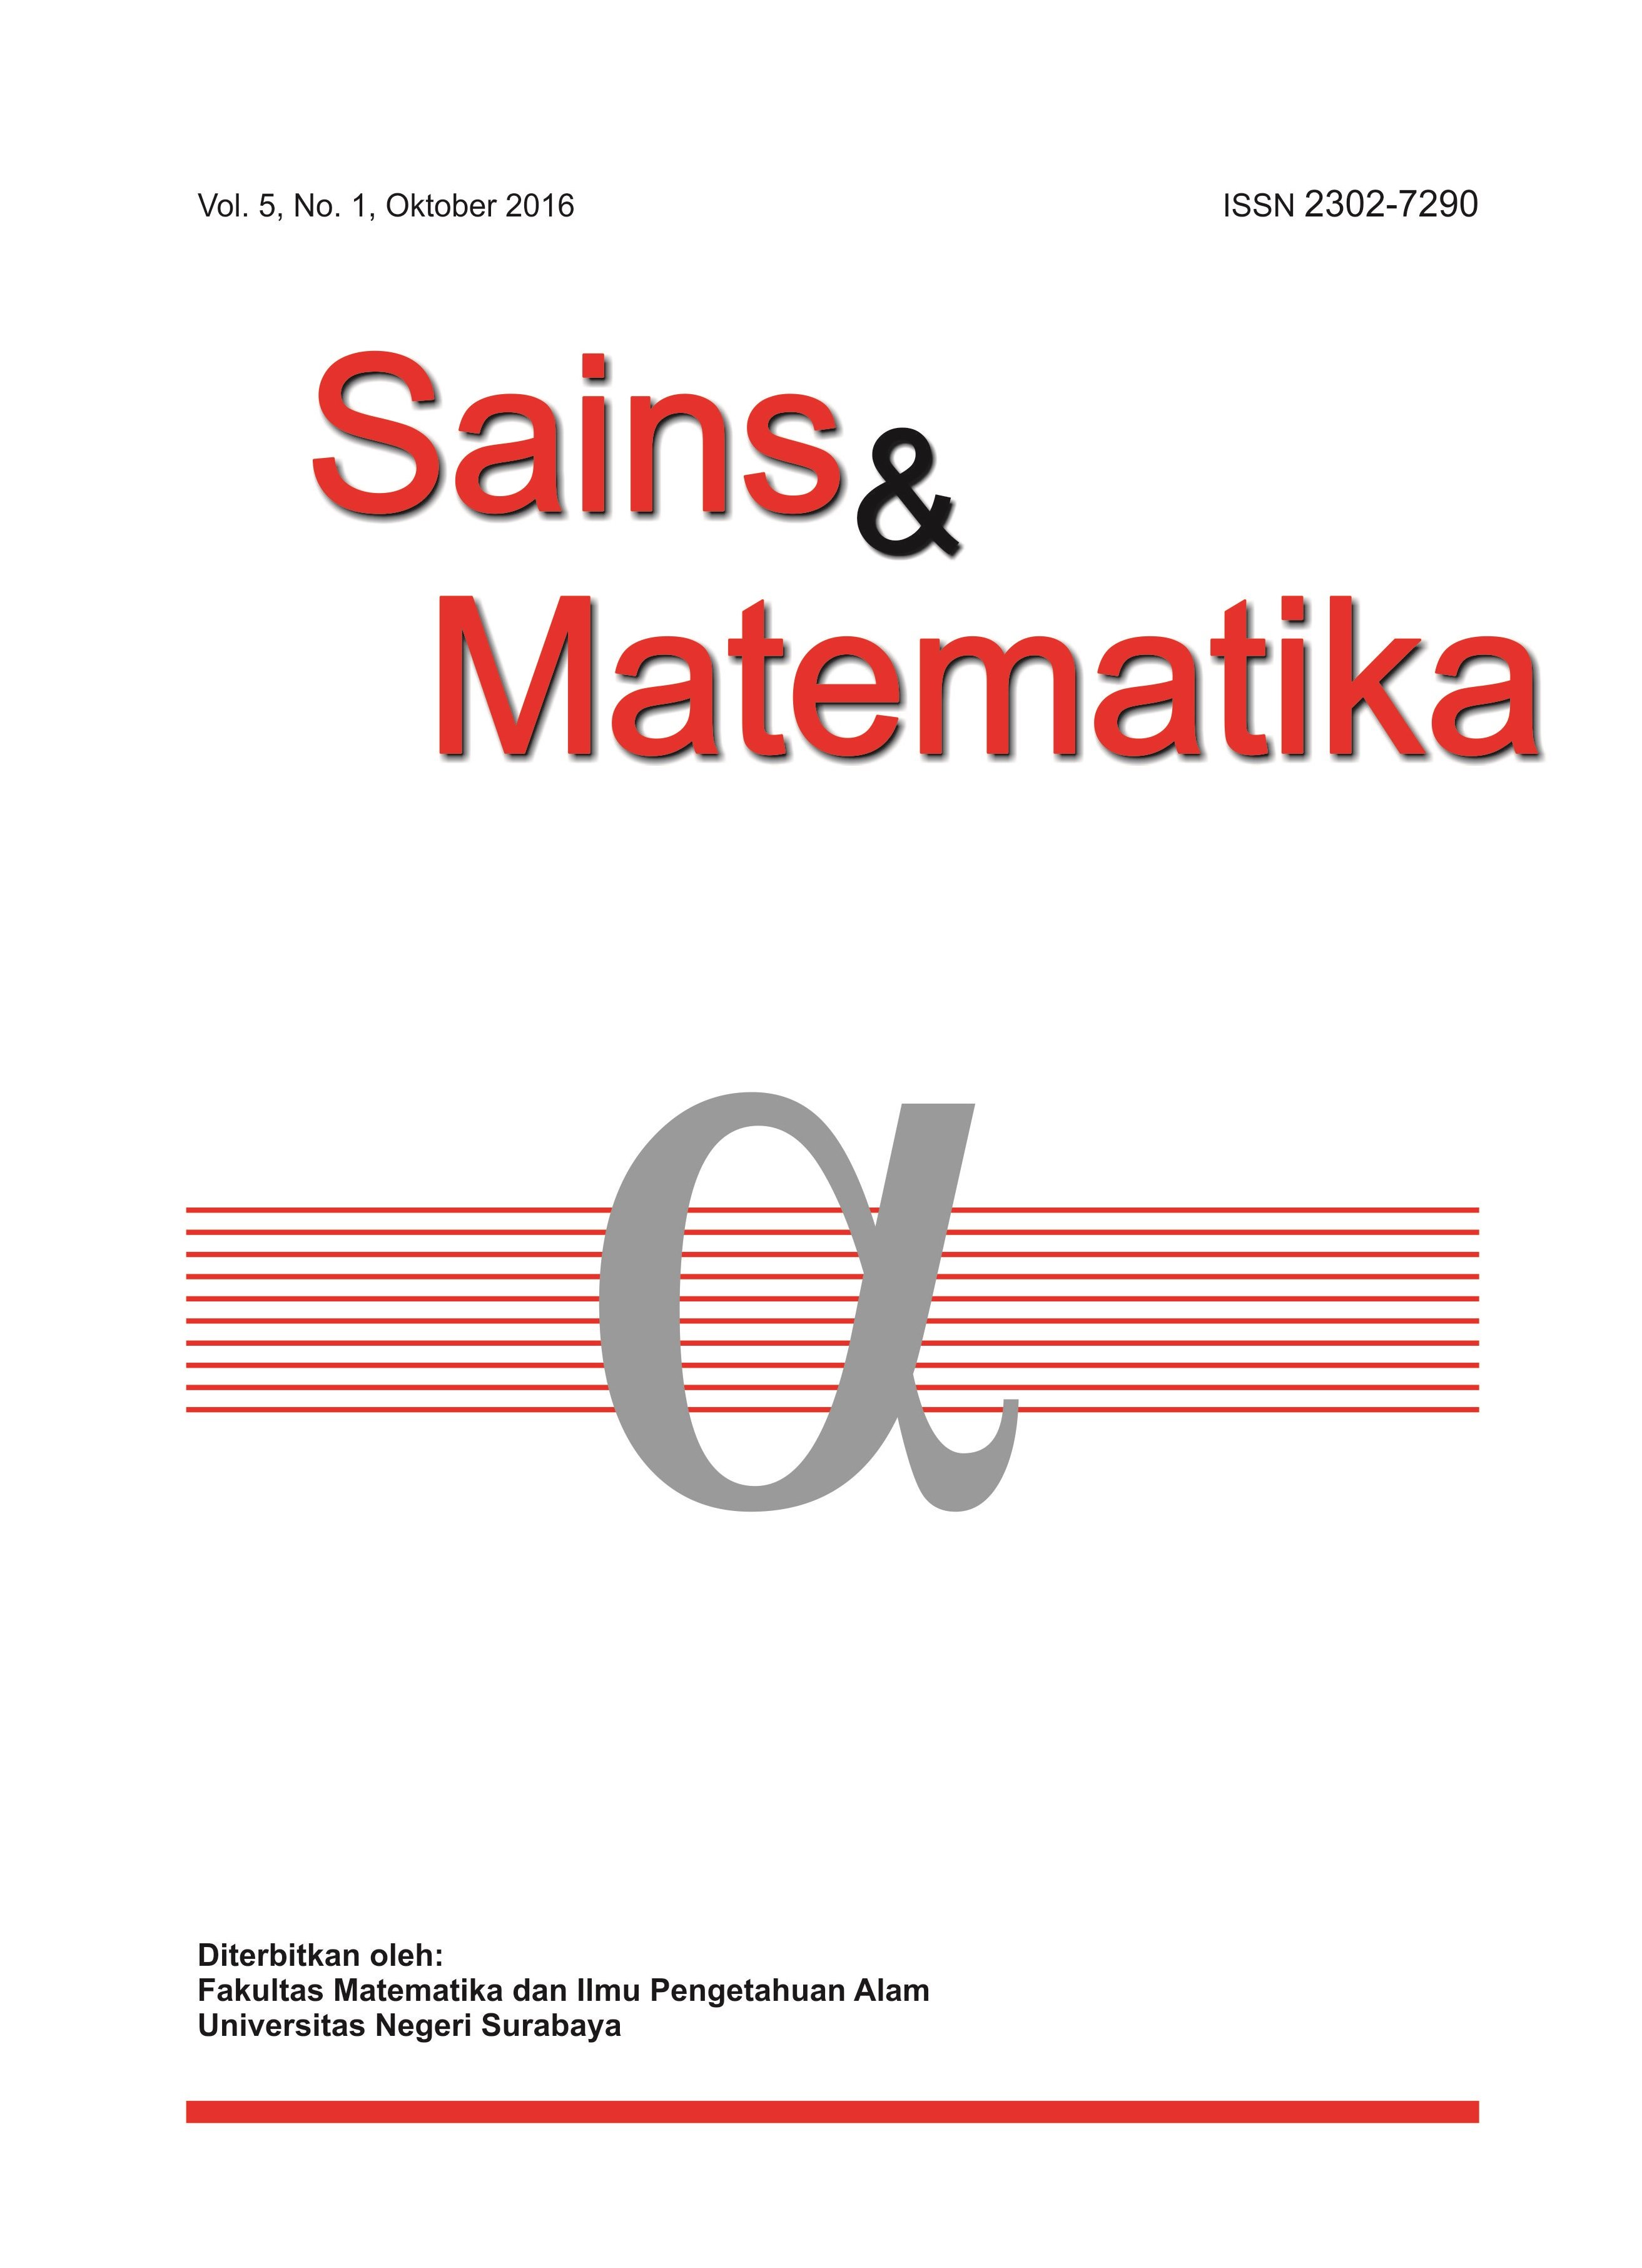 					View Vol. 5 No. 1 (2016): Oktober, Sains & Matematika
				